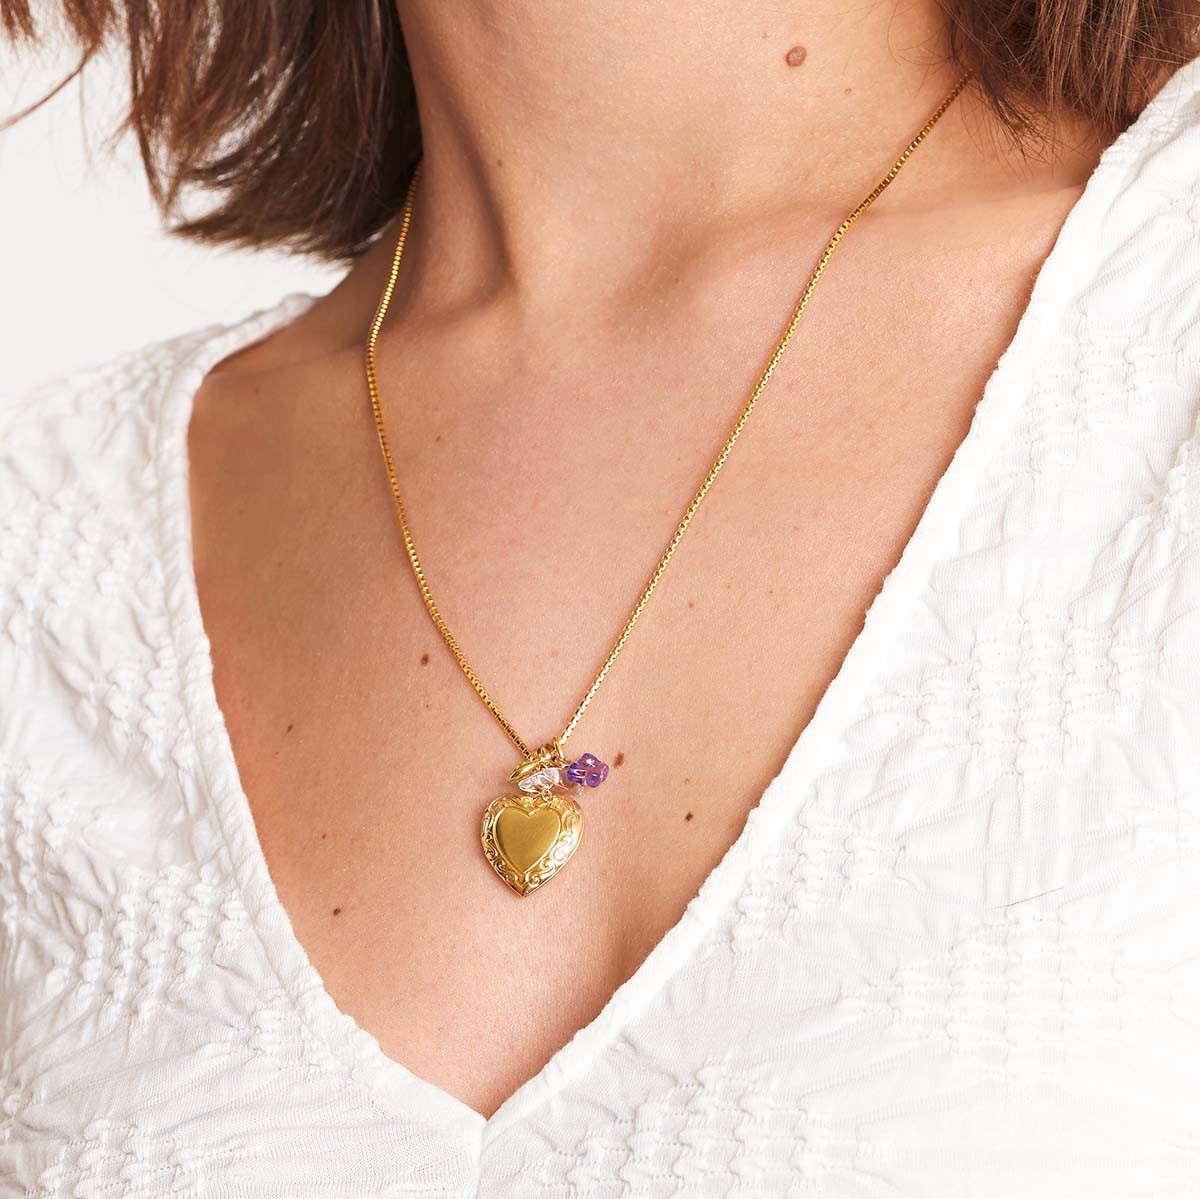 Immaculate Heart Necklace - Halsketten - 18k vergoldet